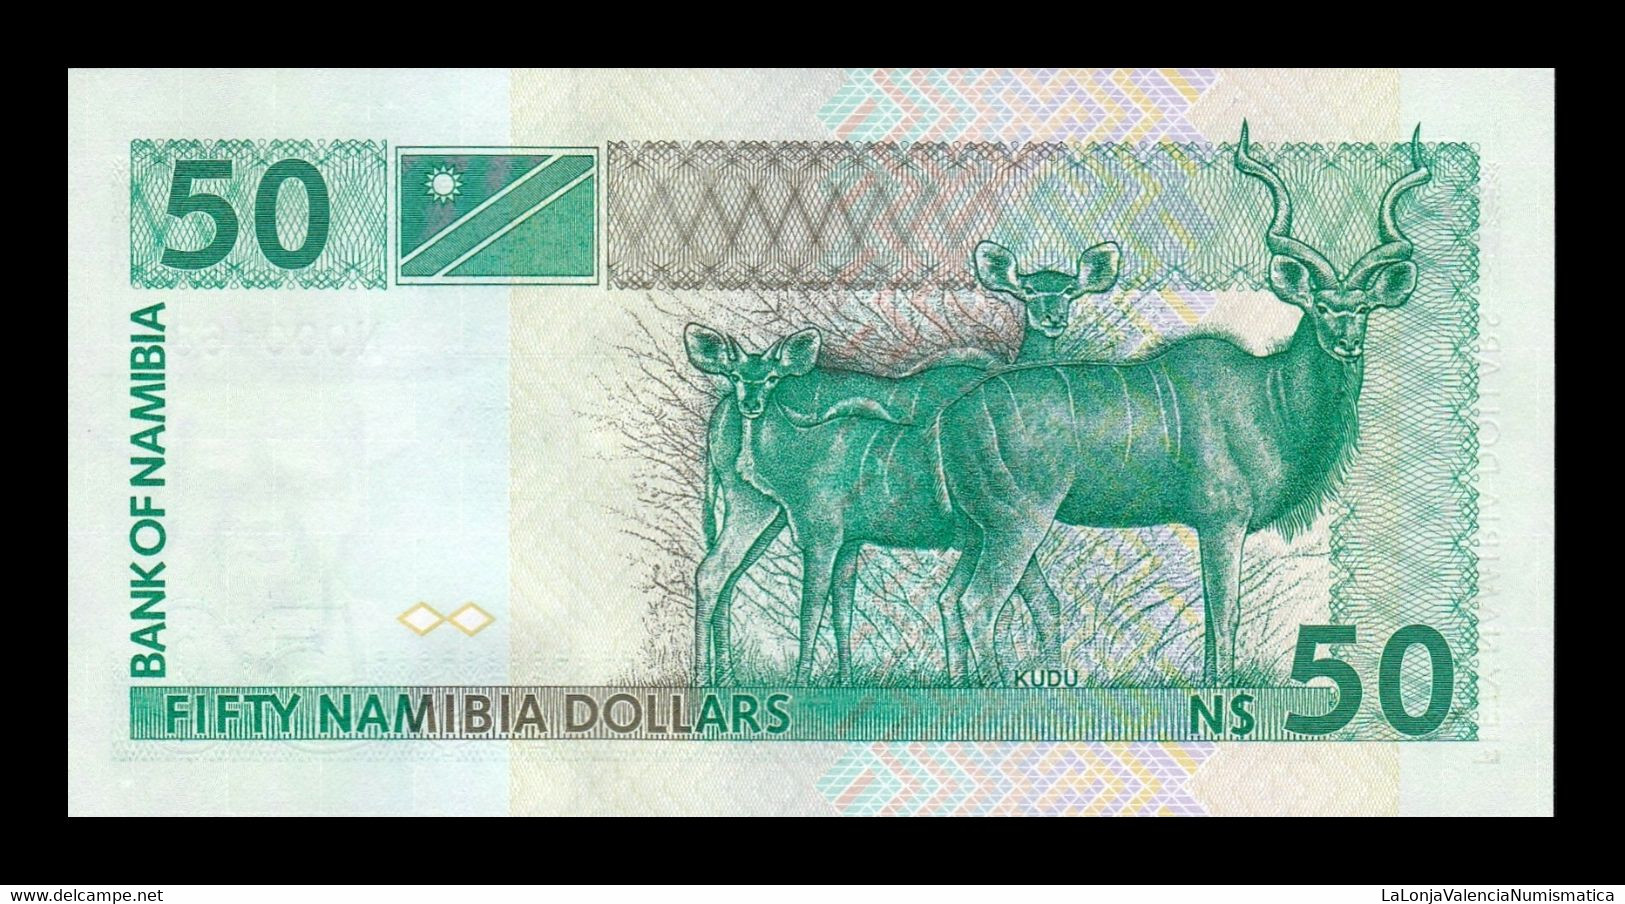 Namibia 50 Dollars 1993 Pick 2 Low Serial T.685 SC UNC - Namibia